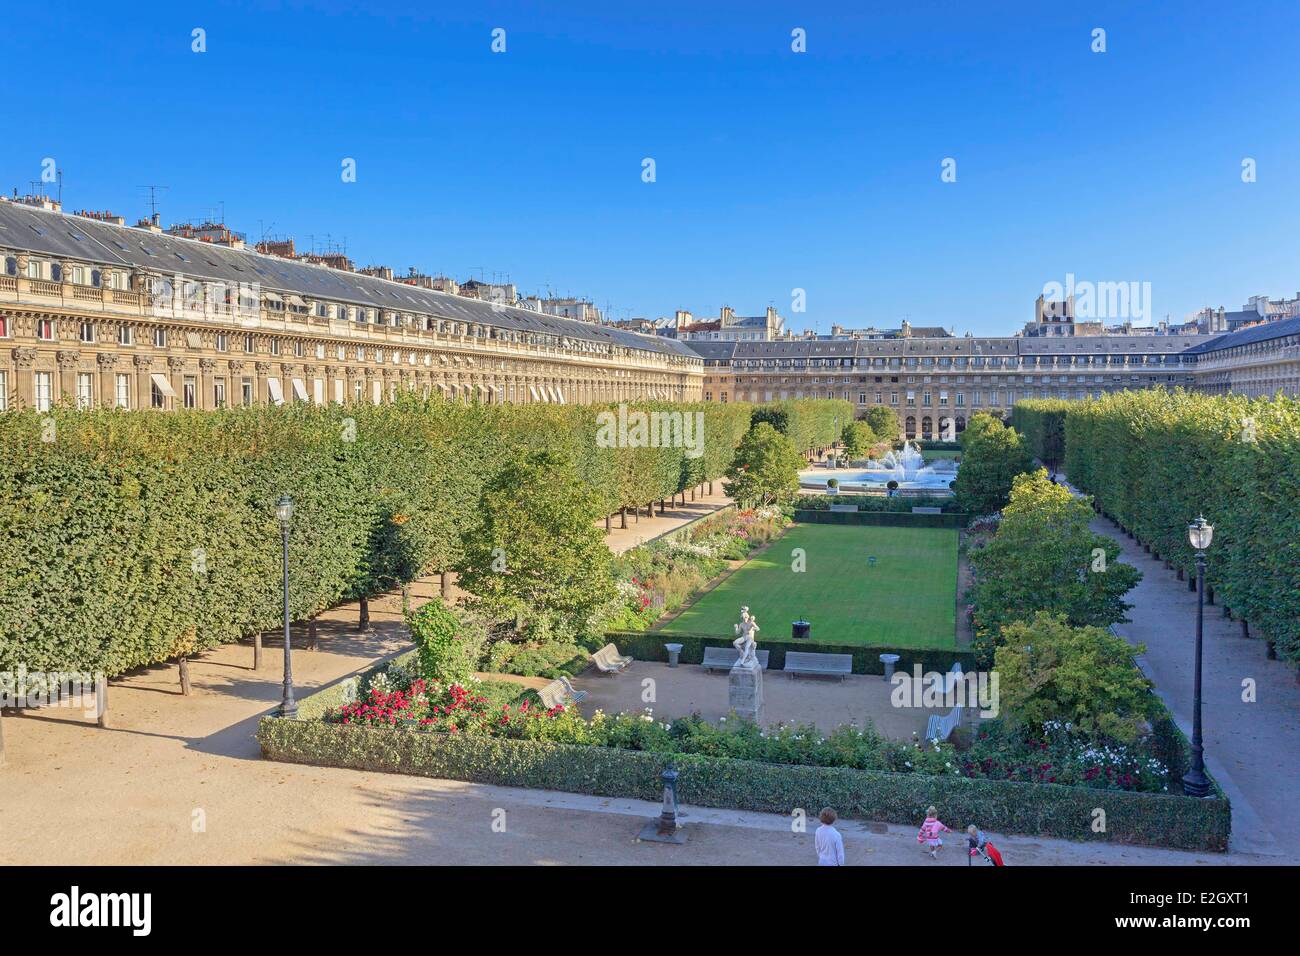 Palais royal garden hi-res stock photography and images - Alamy